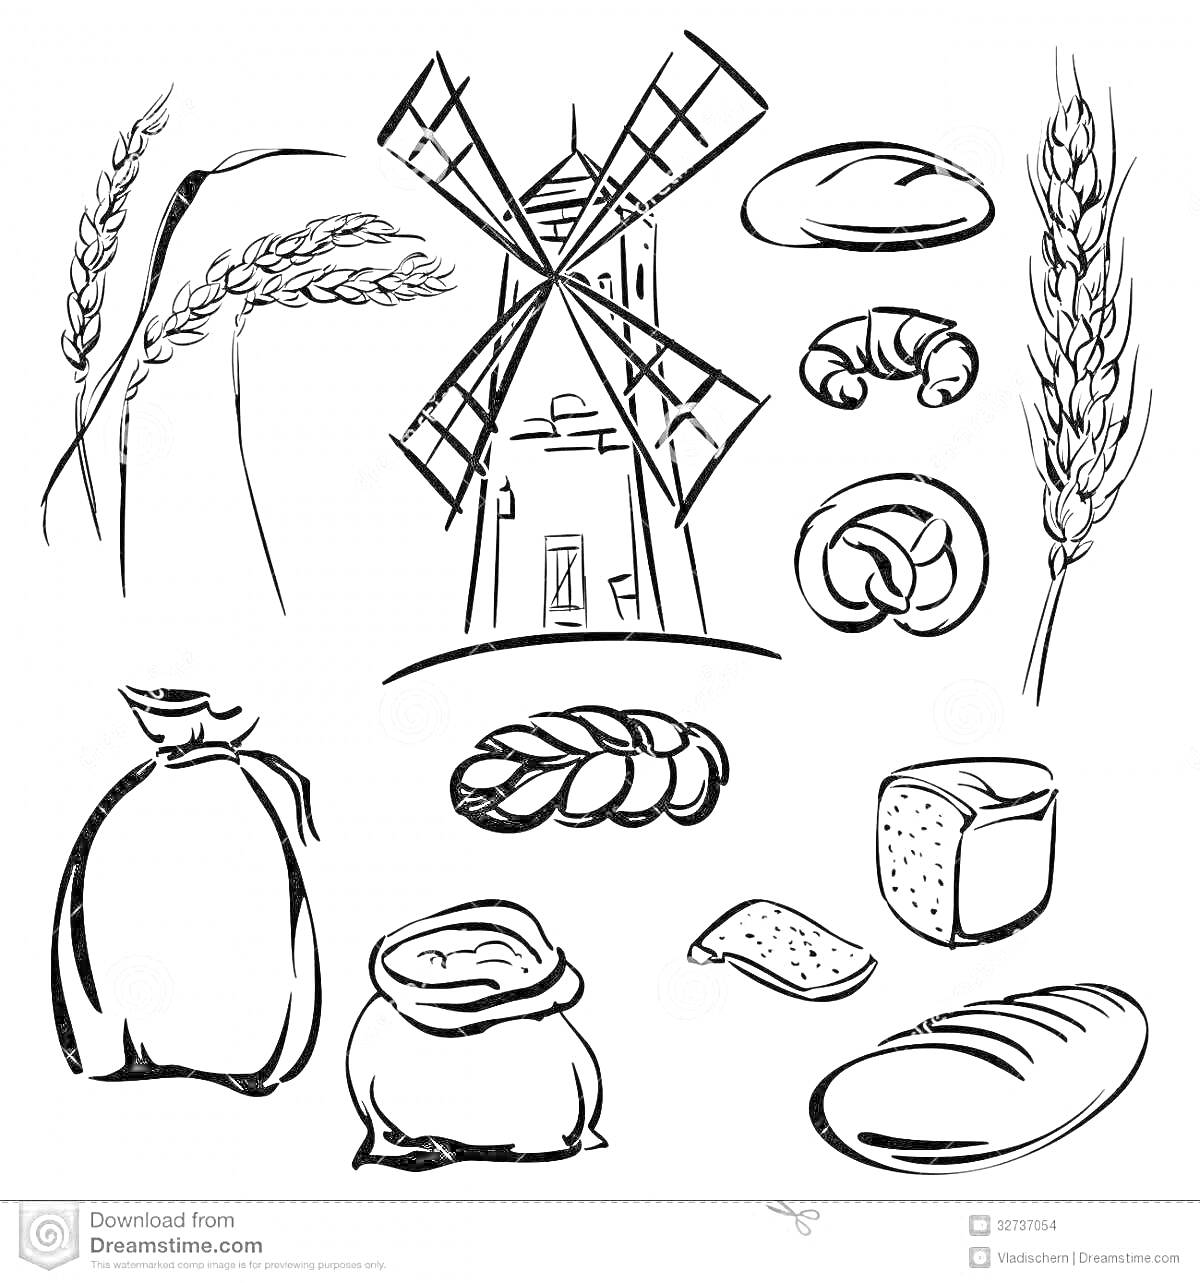 На раскраске изображено: Хлеб, Пшеница, Мельница, Выпечка, Батон, Булка, Буханка, Мука